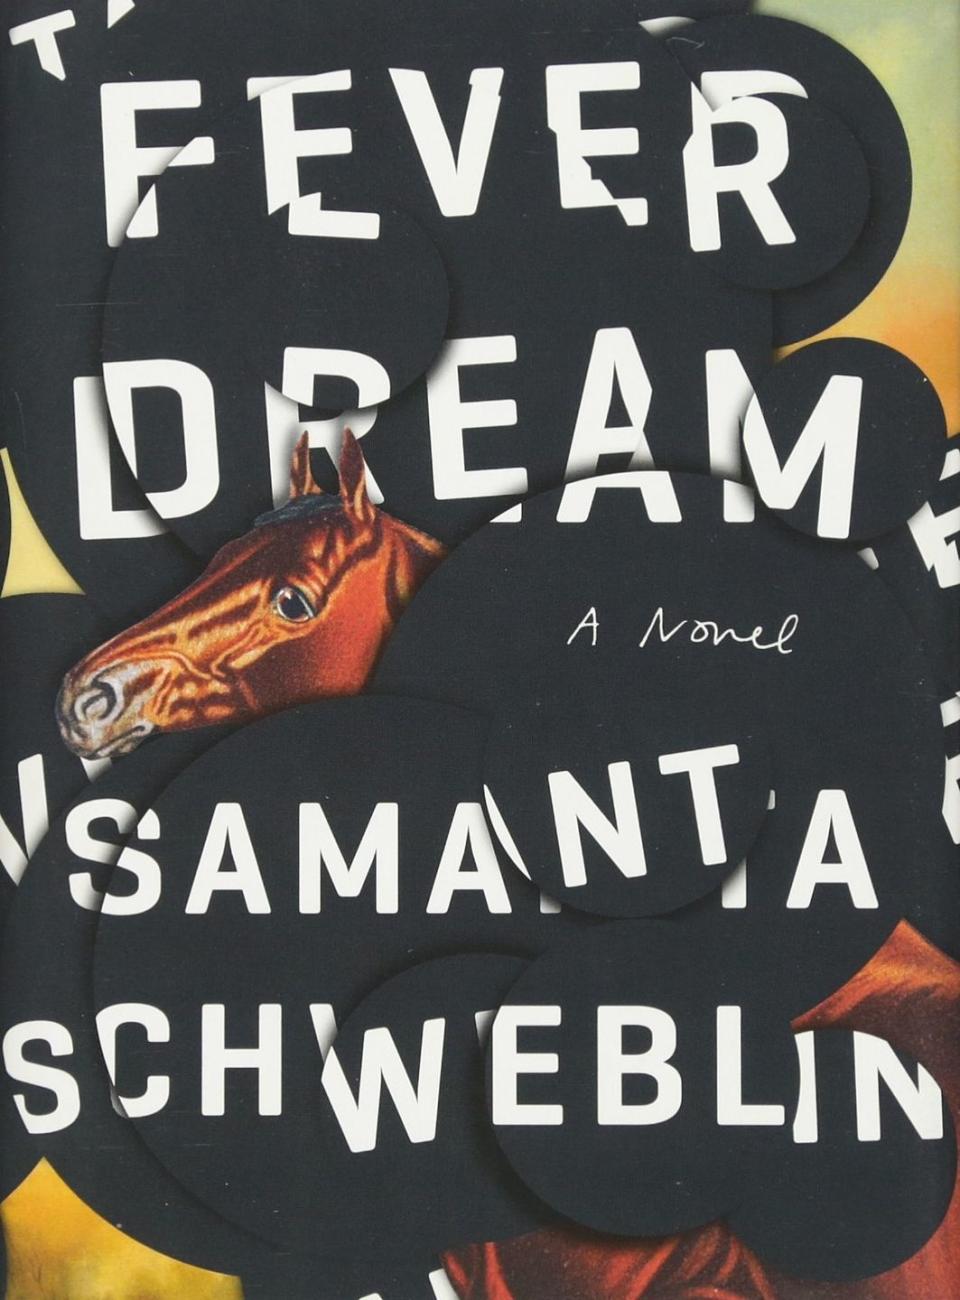 'Fever Dream' by Samanta Schweblin